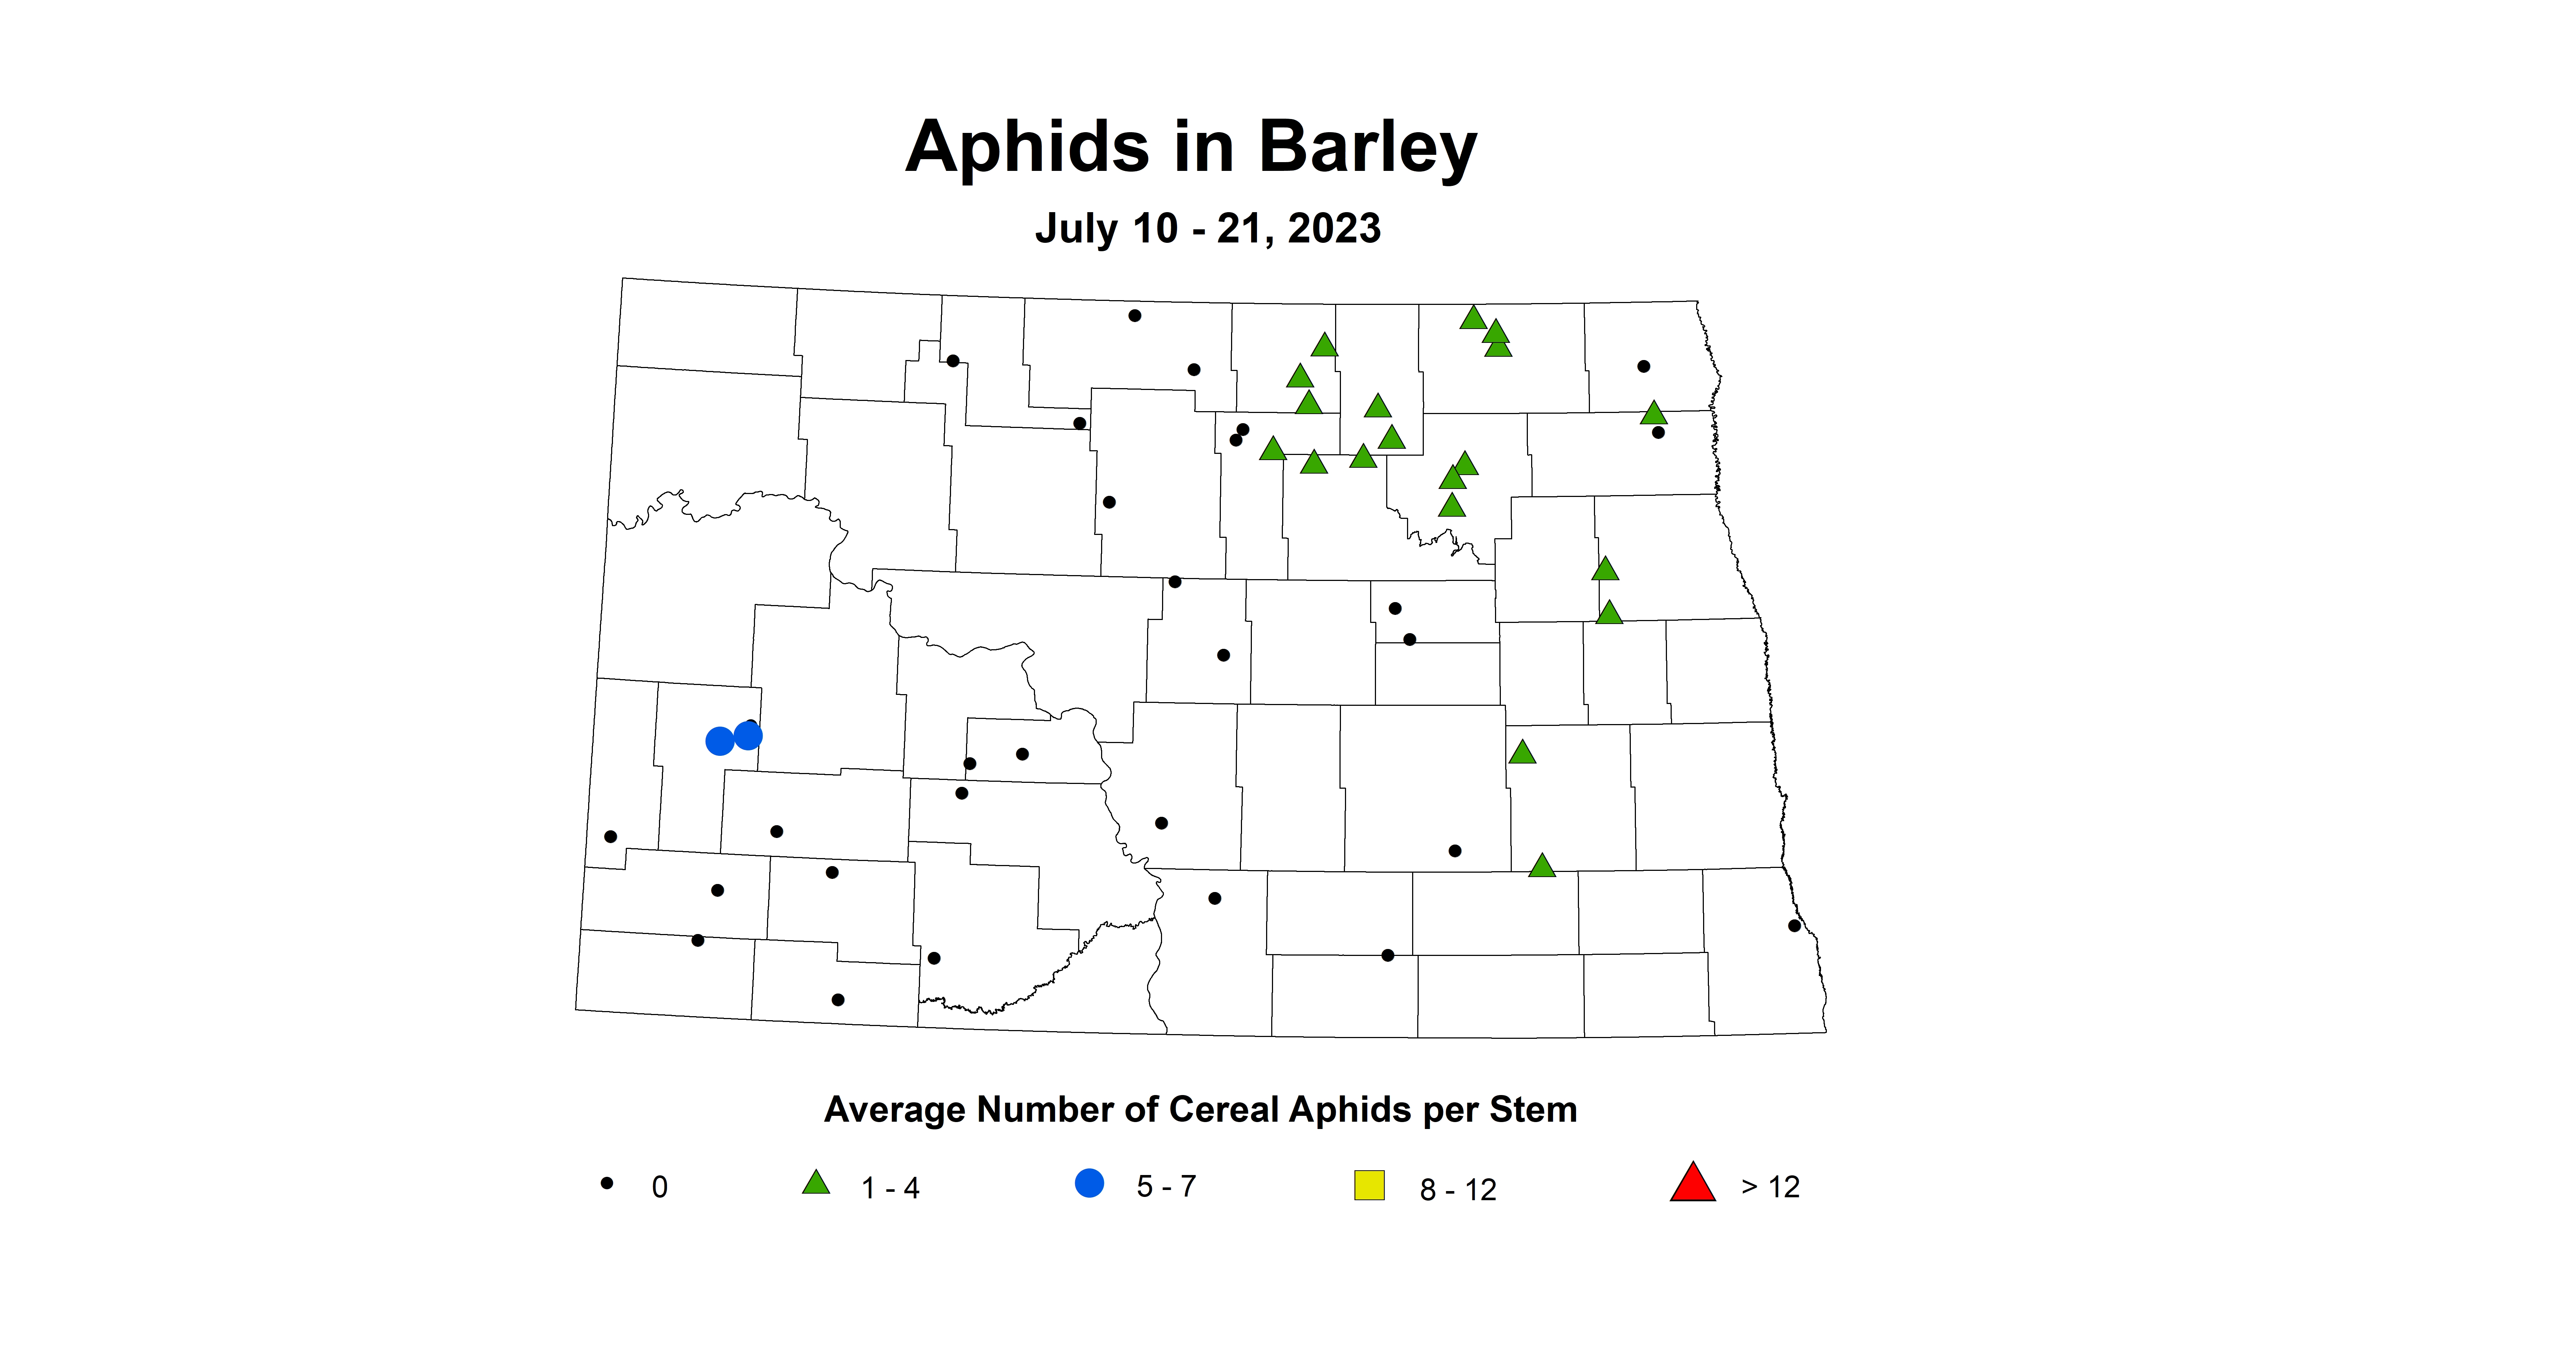 barley aphid July 10-21 2023